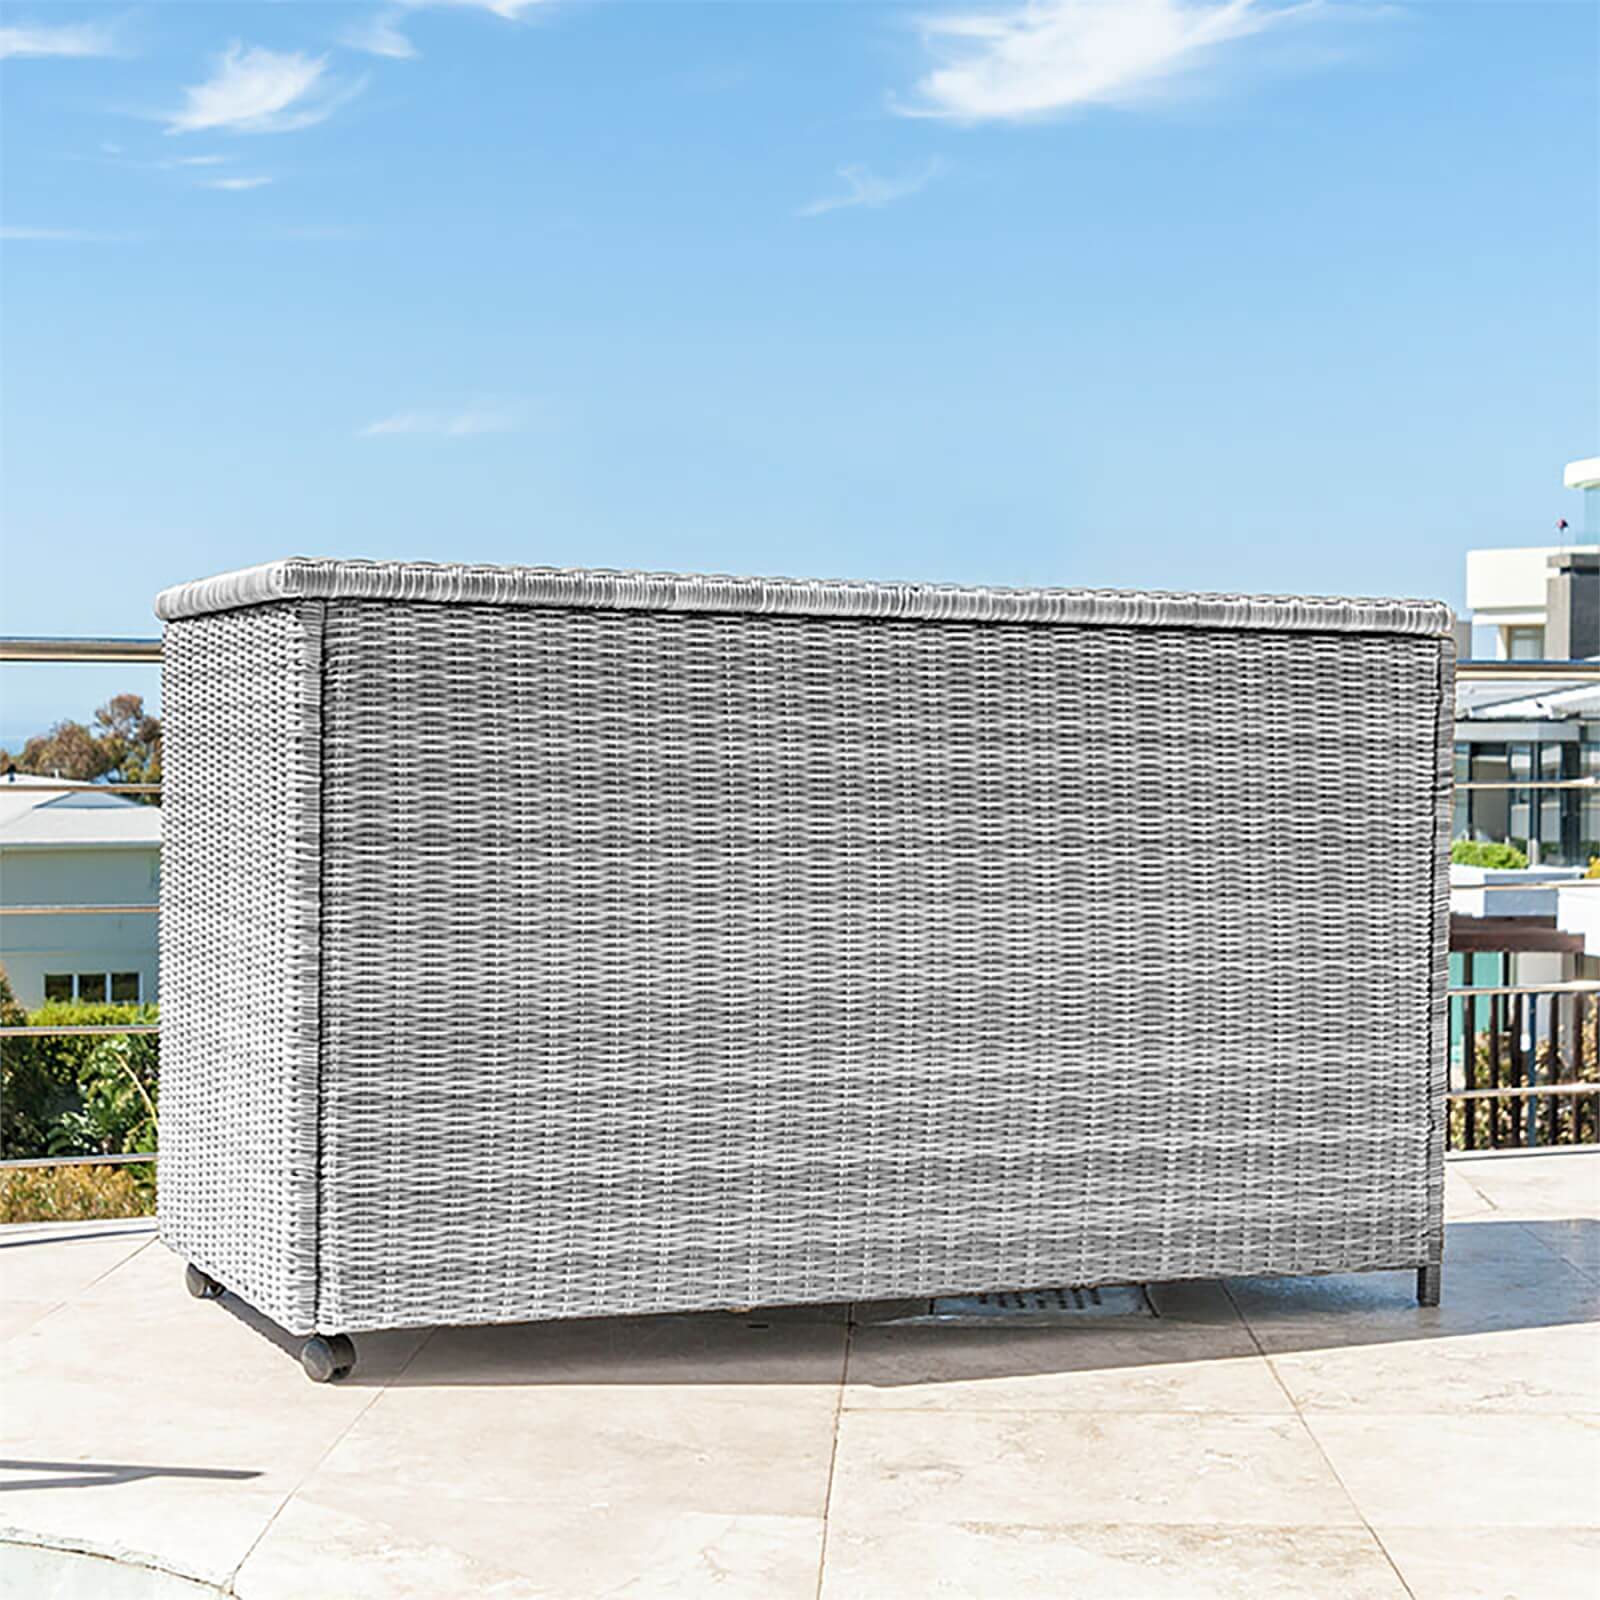 Outdoor Rattan Cushion Storage Box - White Wash